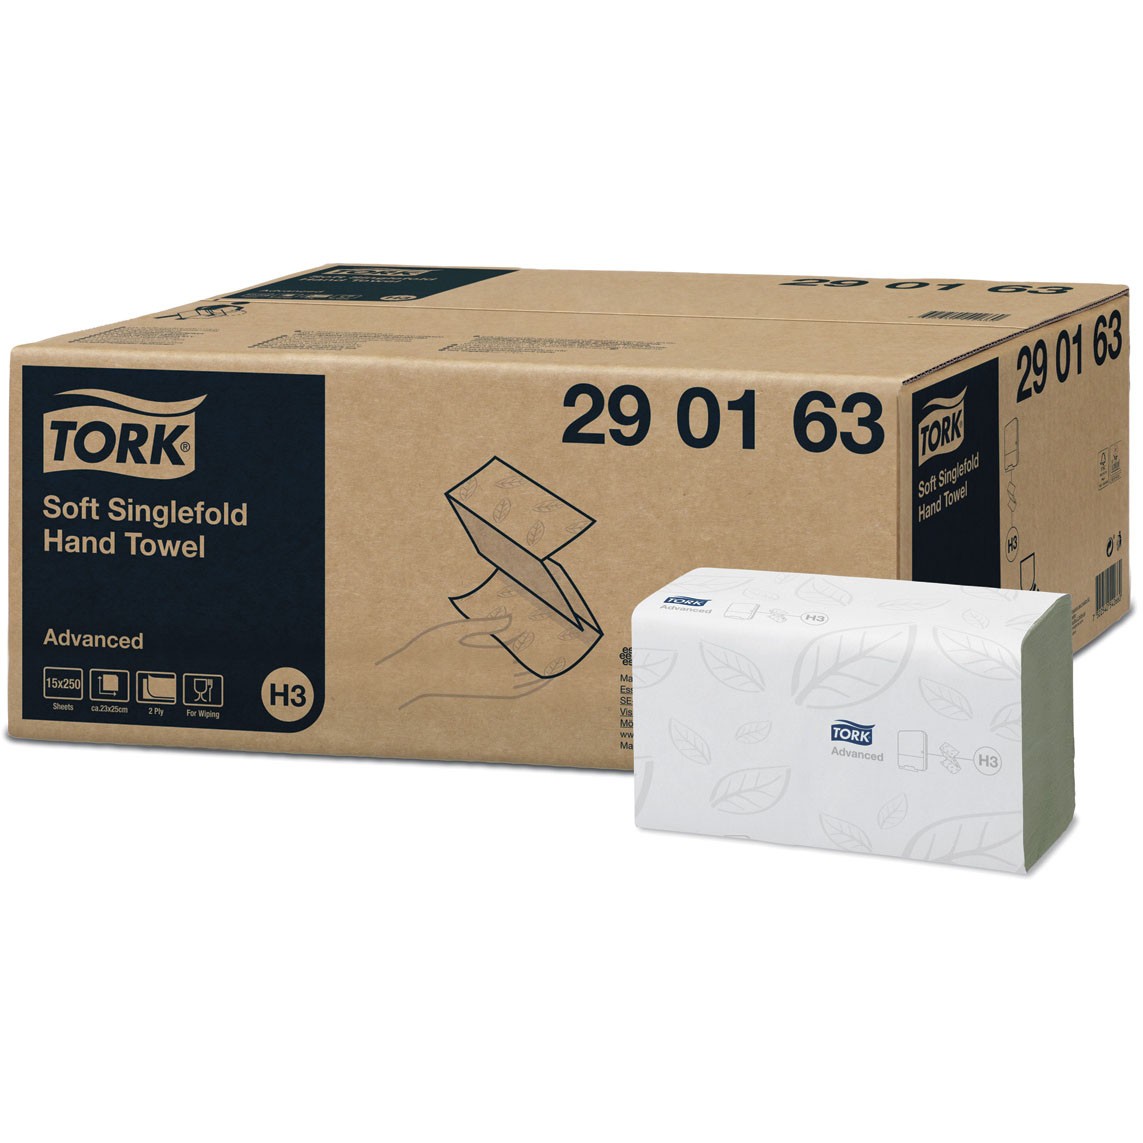 Håndklædeark Tork Advanced H3 Soft, 2-fold, 2-lags (15x250)